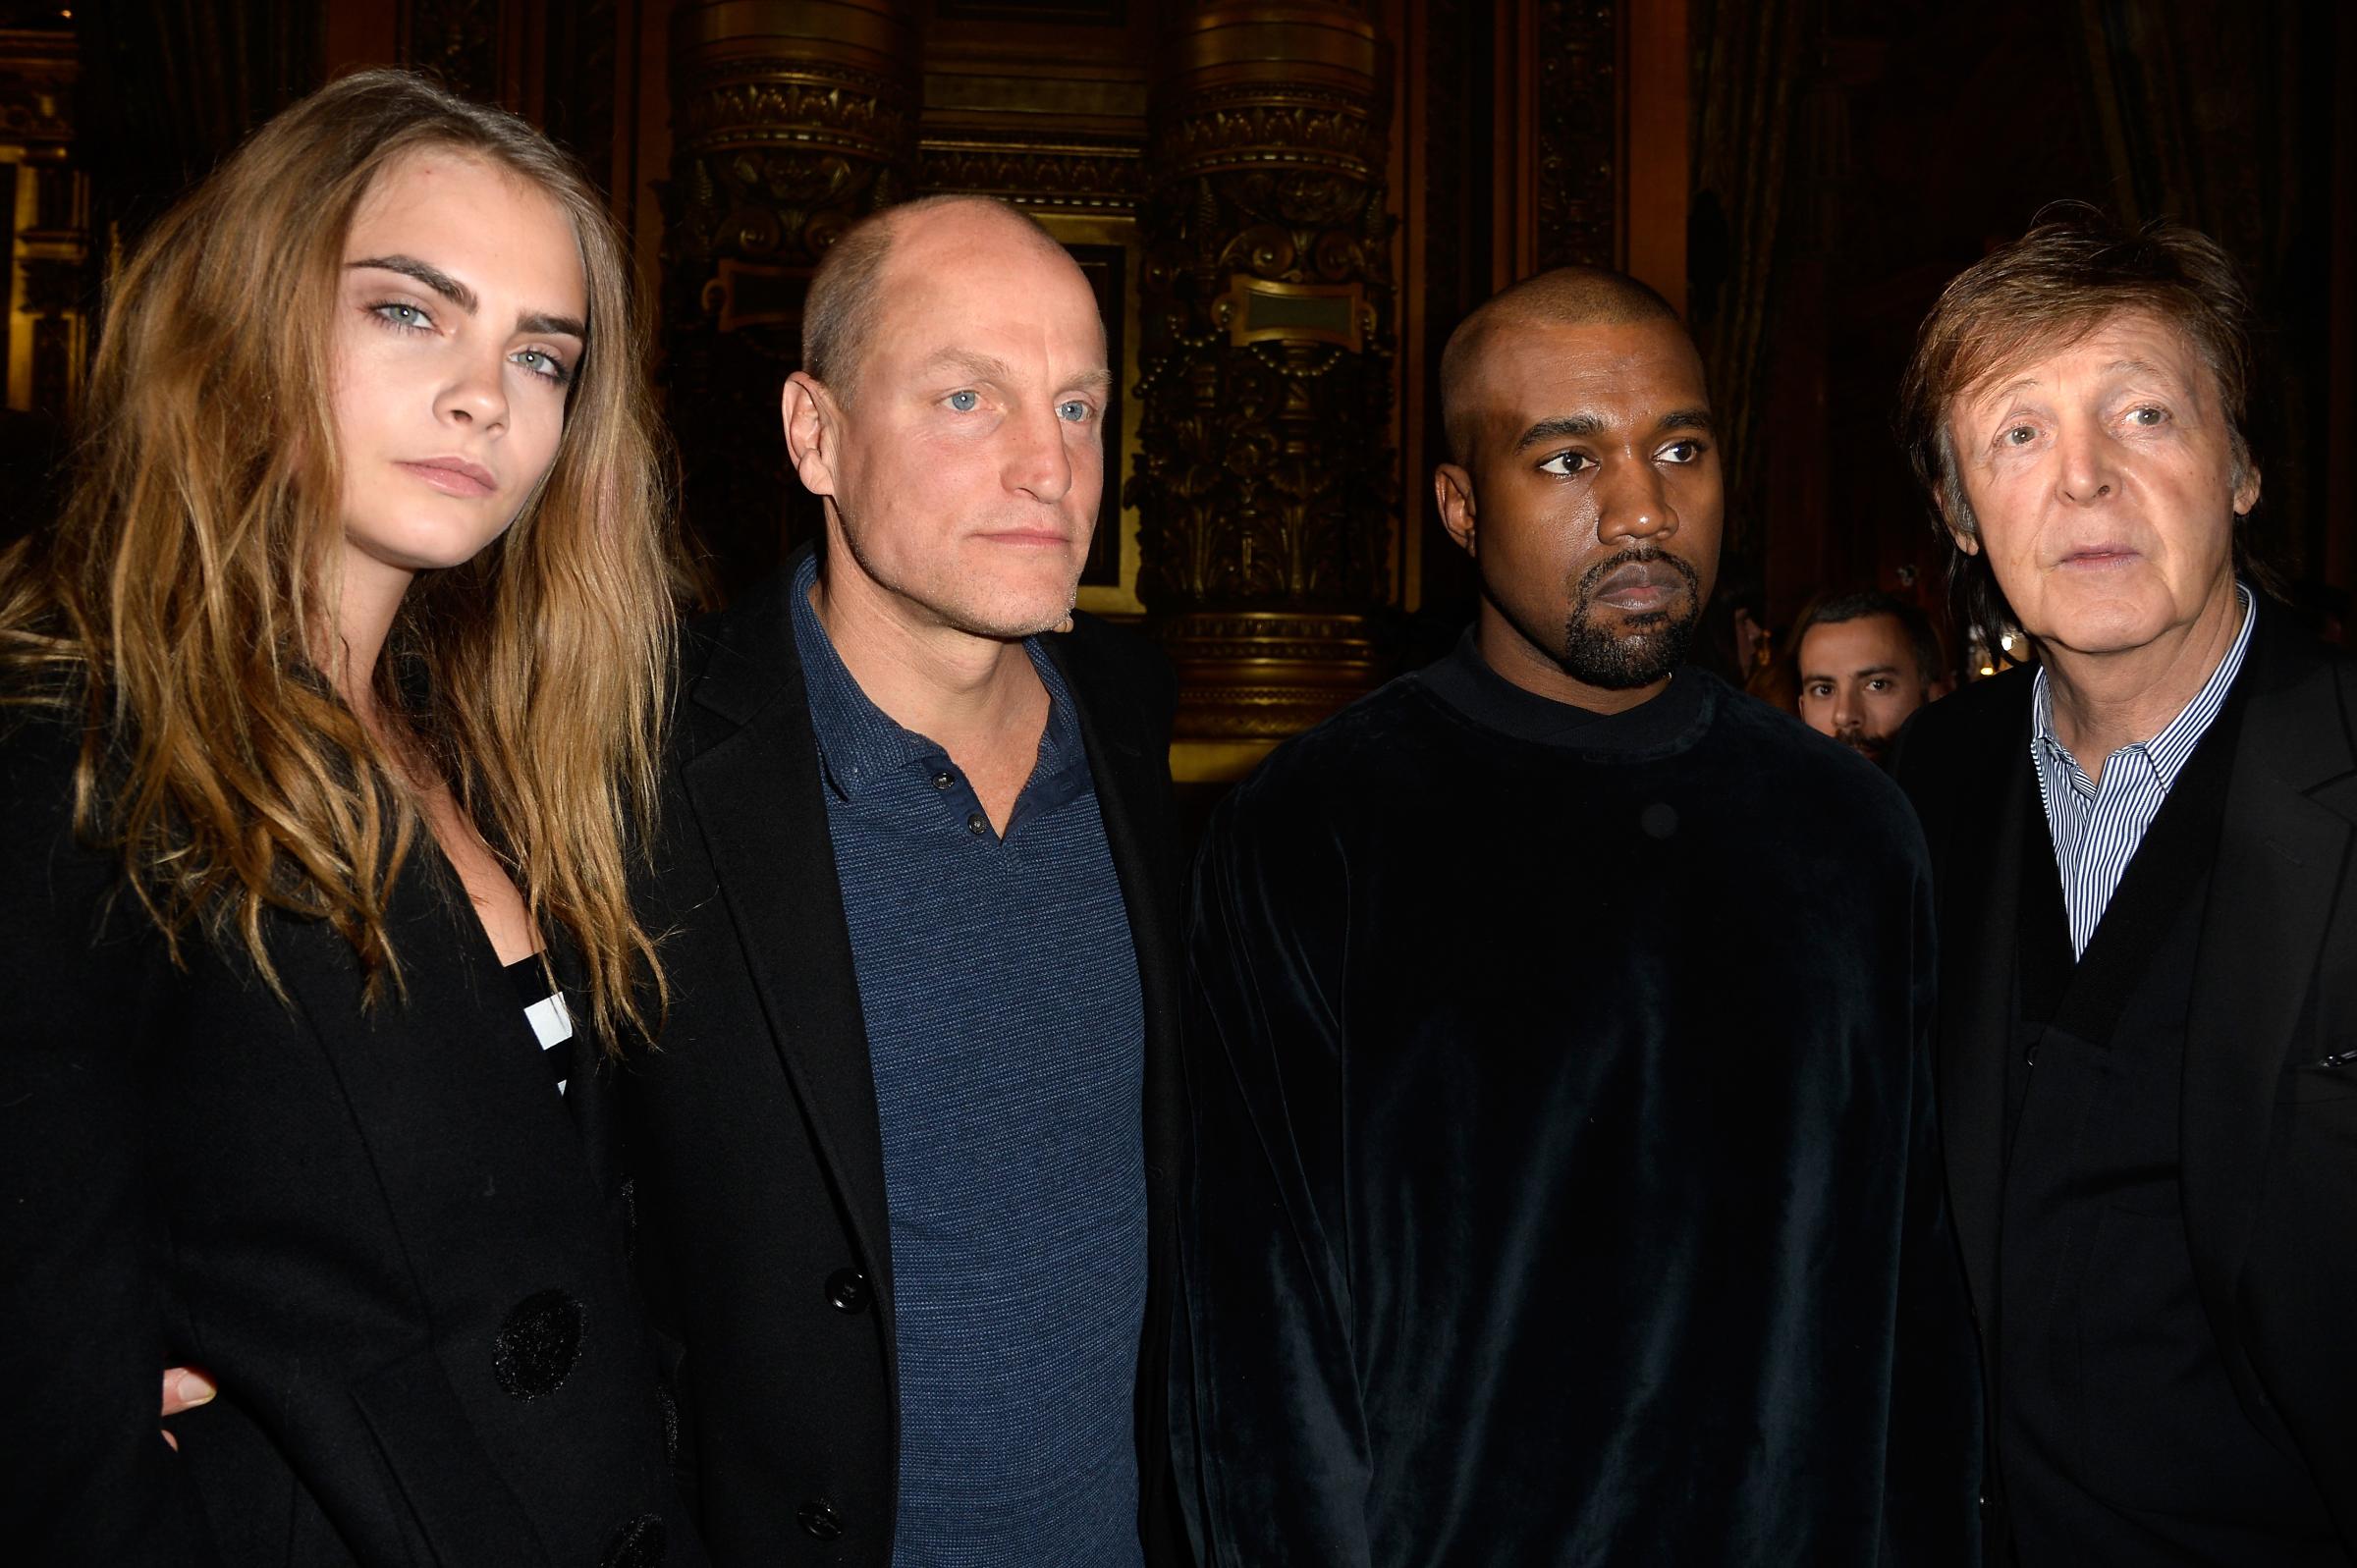 Cara Delevingne, Woody Harrelson, Kanye West and Paul McCartney at the Stella McCartney Fall/Winter 2015 fashion show.